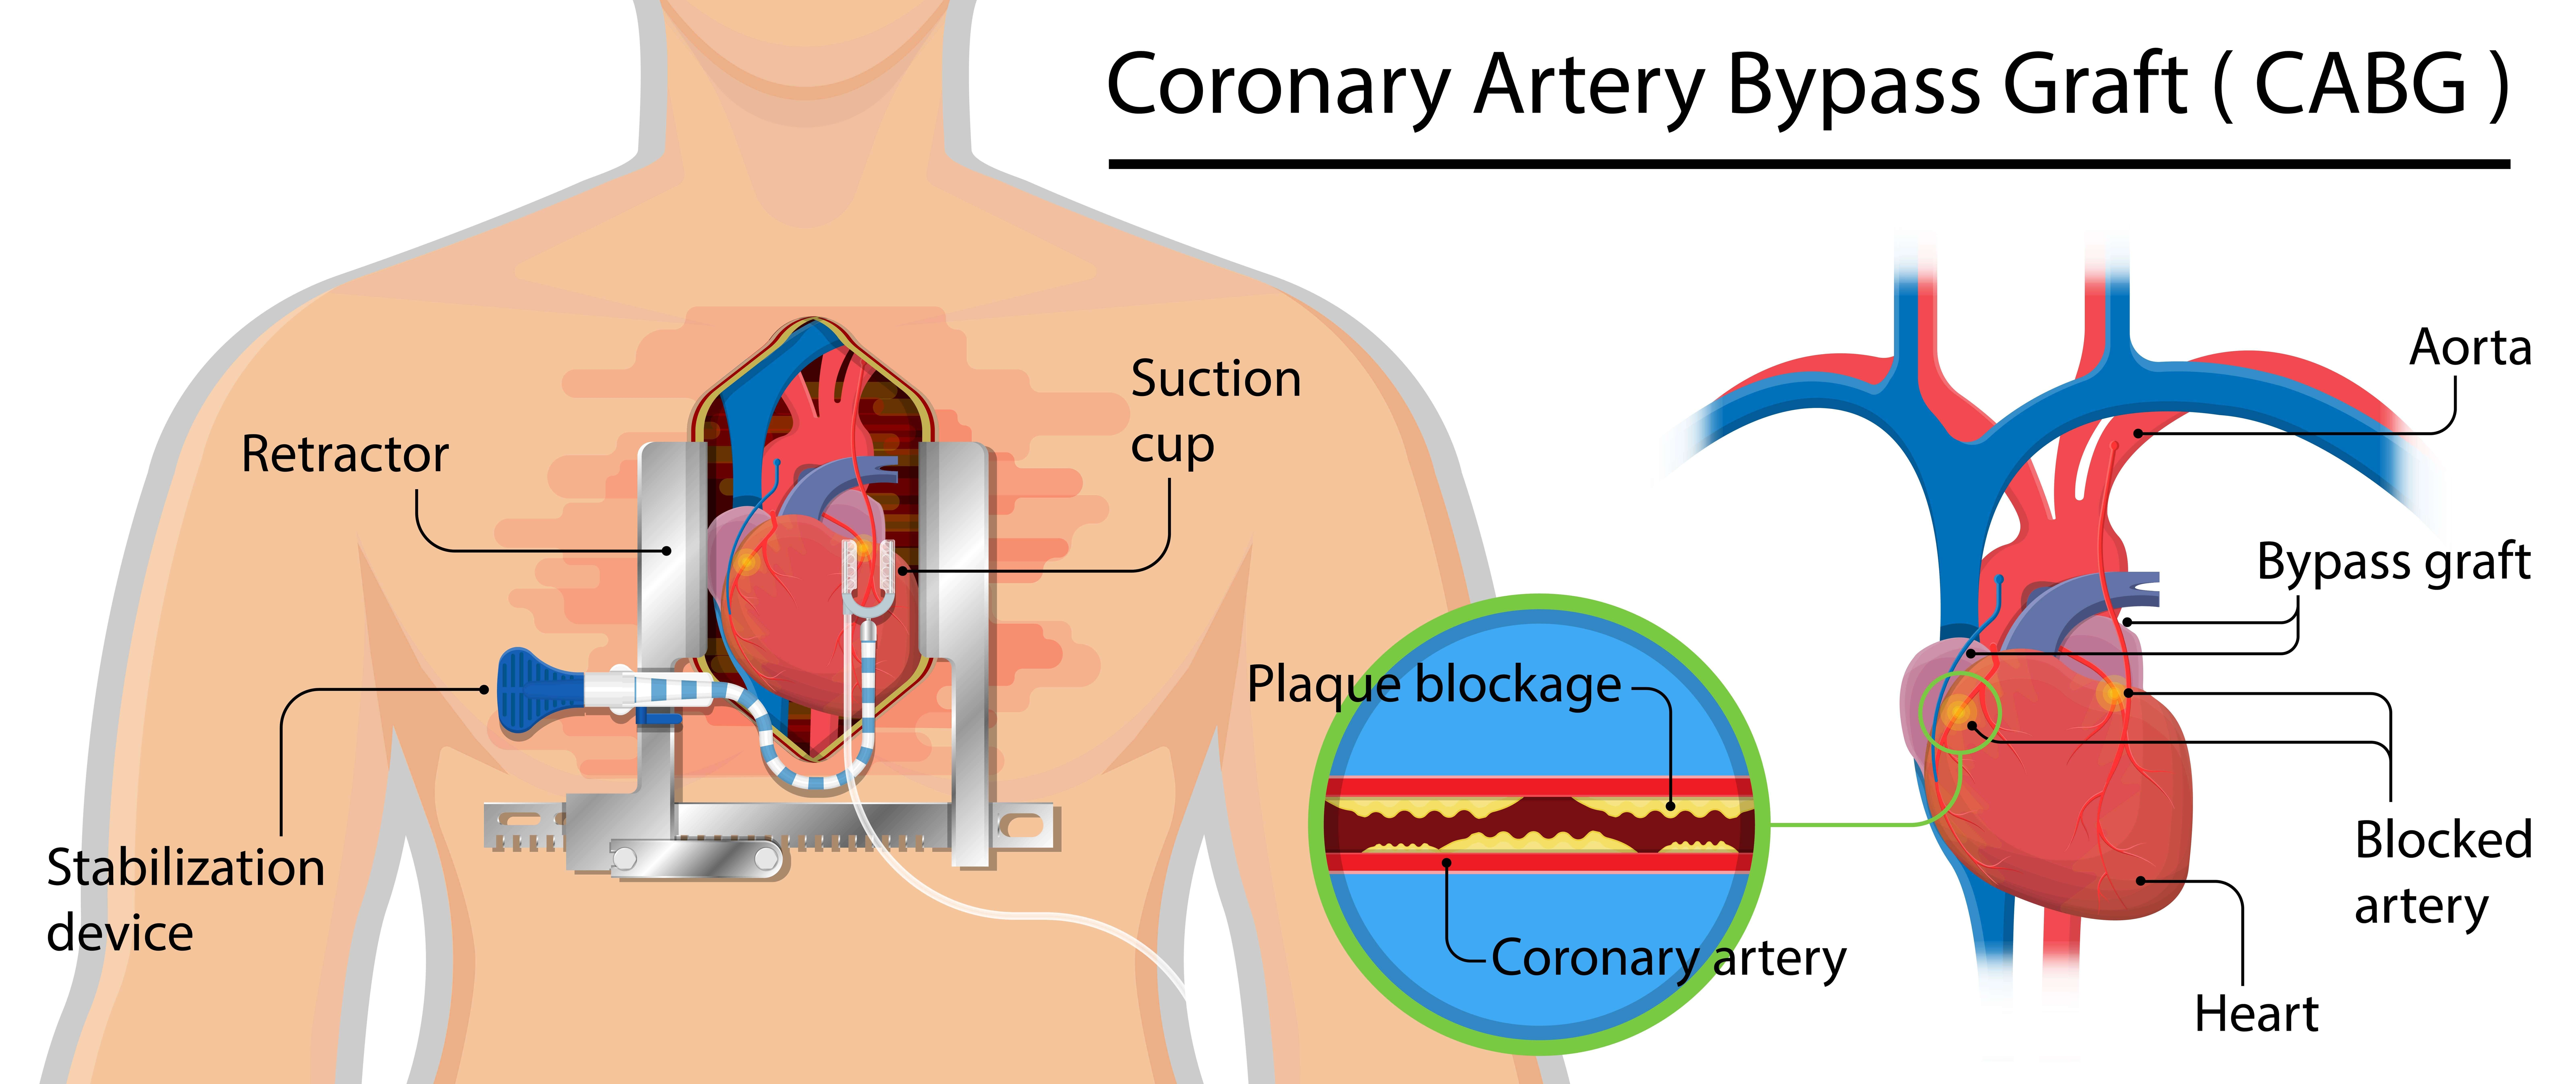 CABG (Coronary Artery Bypass Graft) Procedure